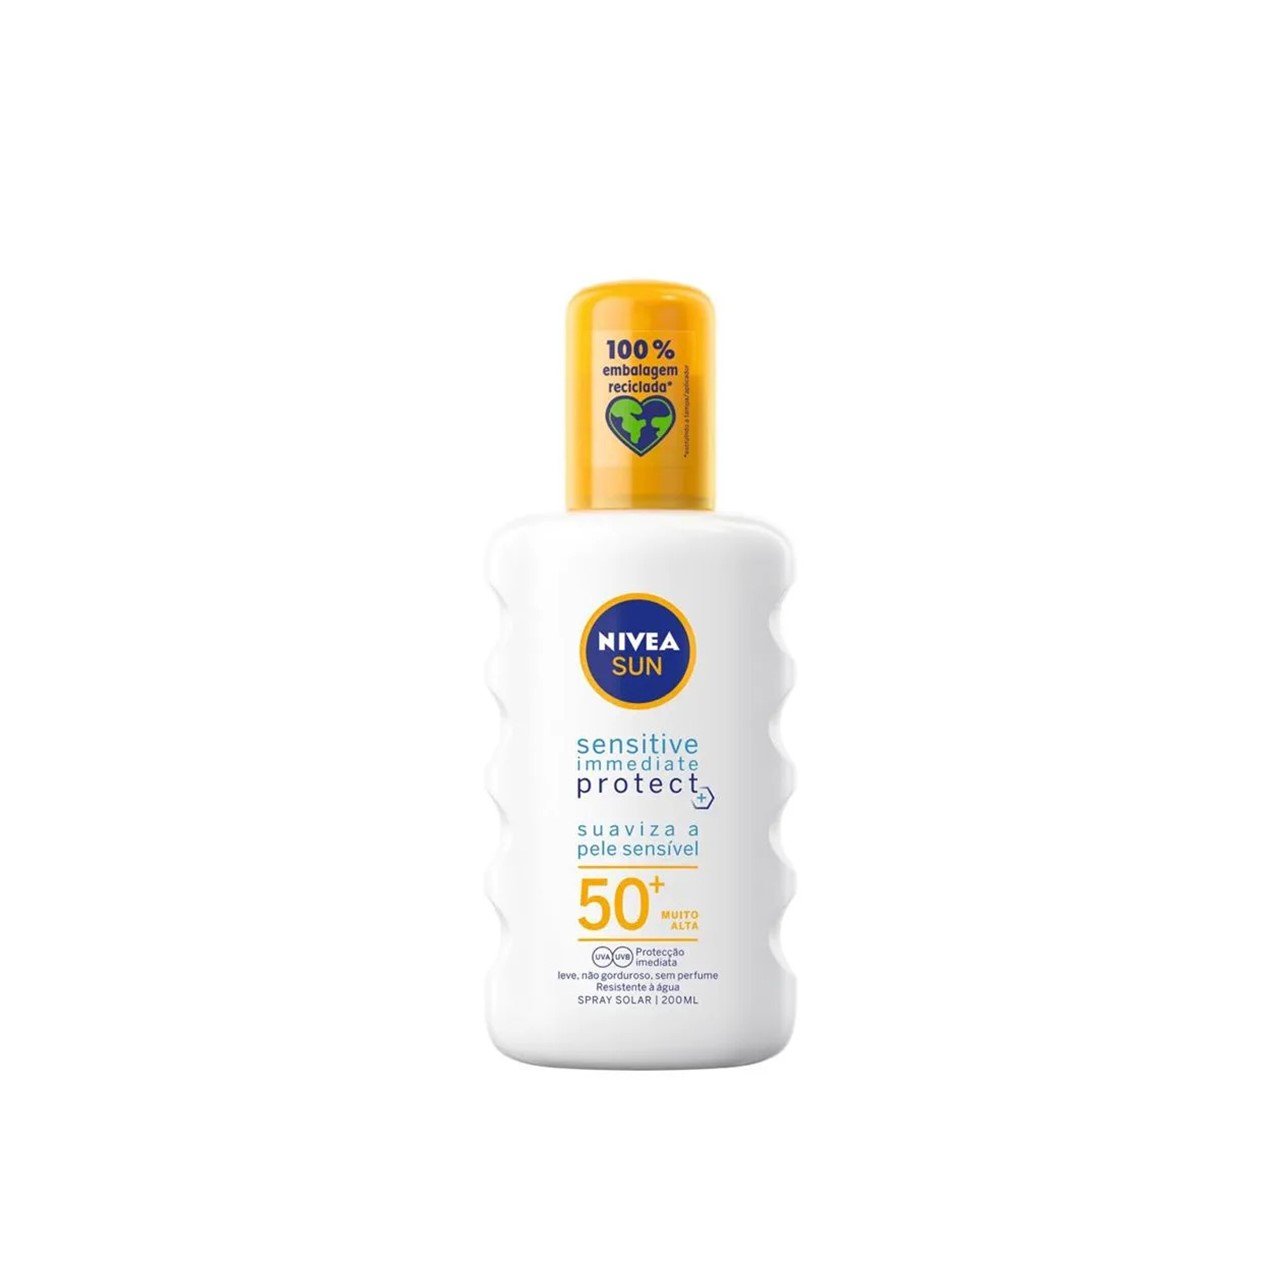 Nivea Sun Sensitive Immediate Protect Sunscreen Spray SPF50+ 200ml